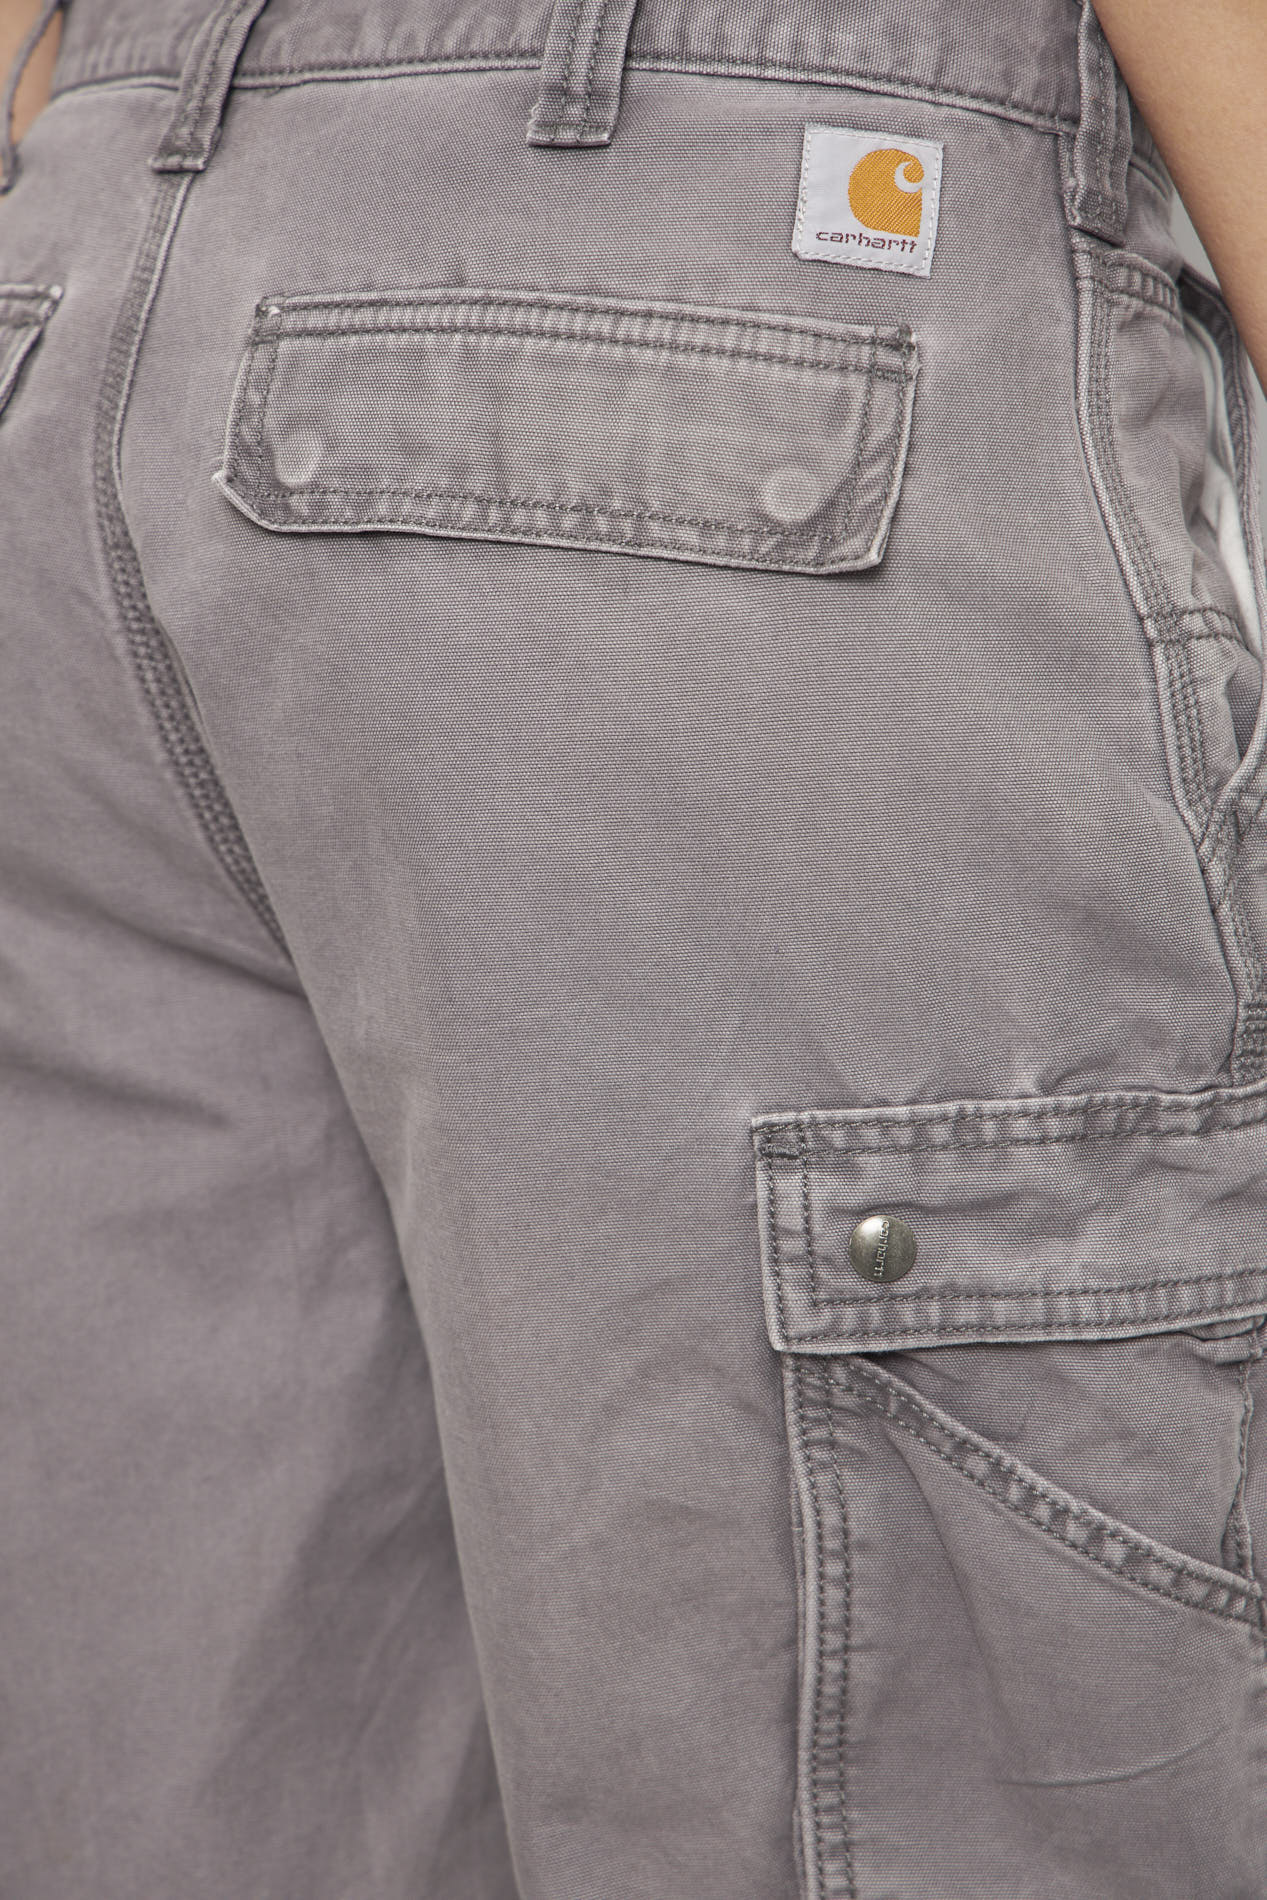 Shorts casual  gris carhartt talla 40 418